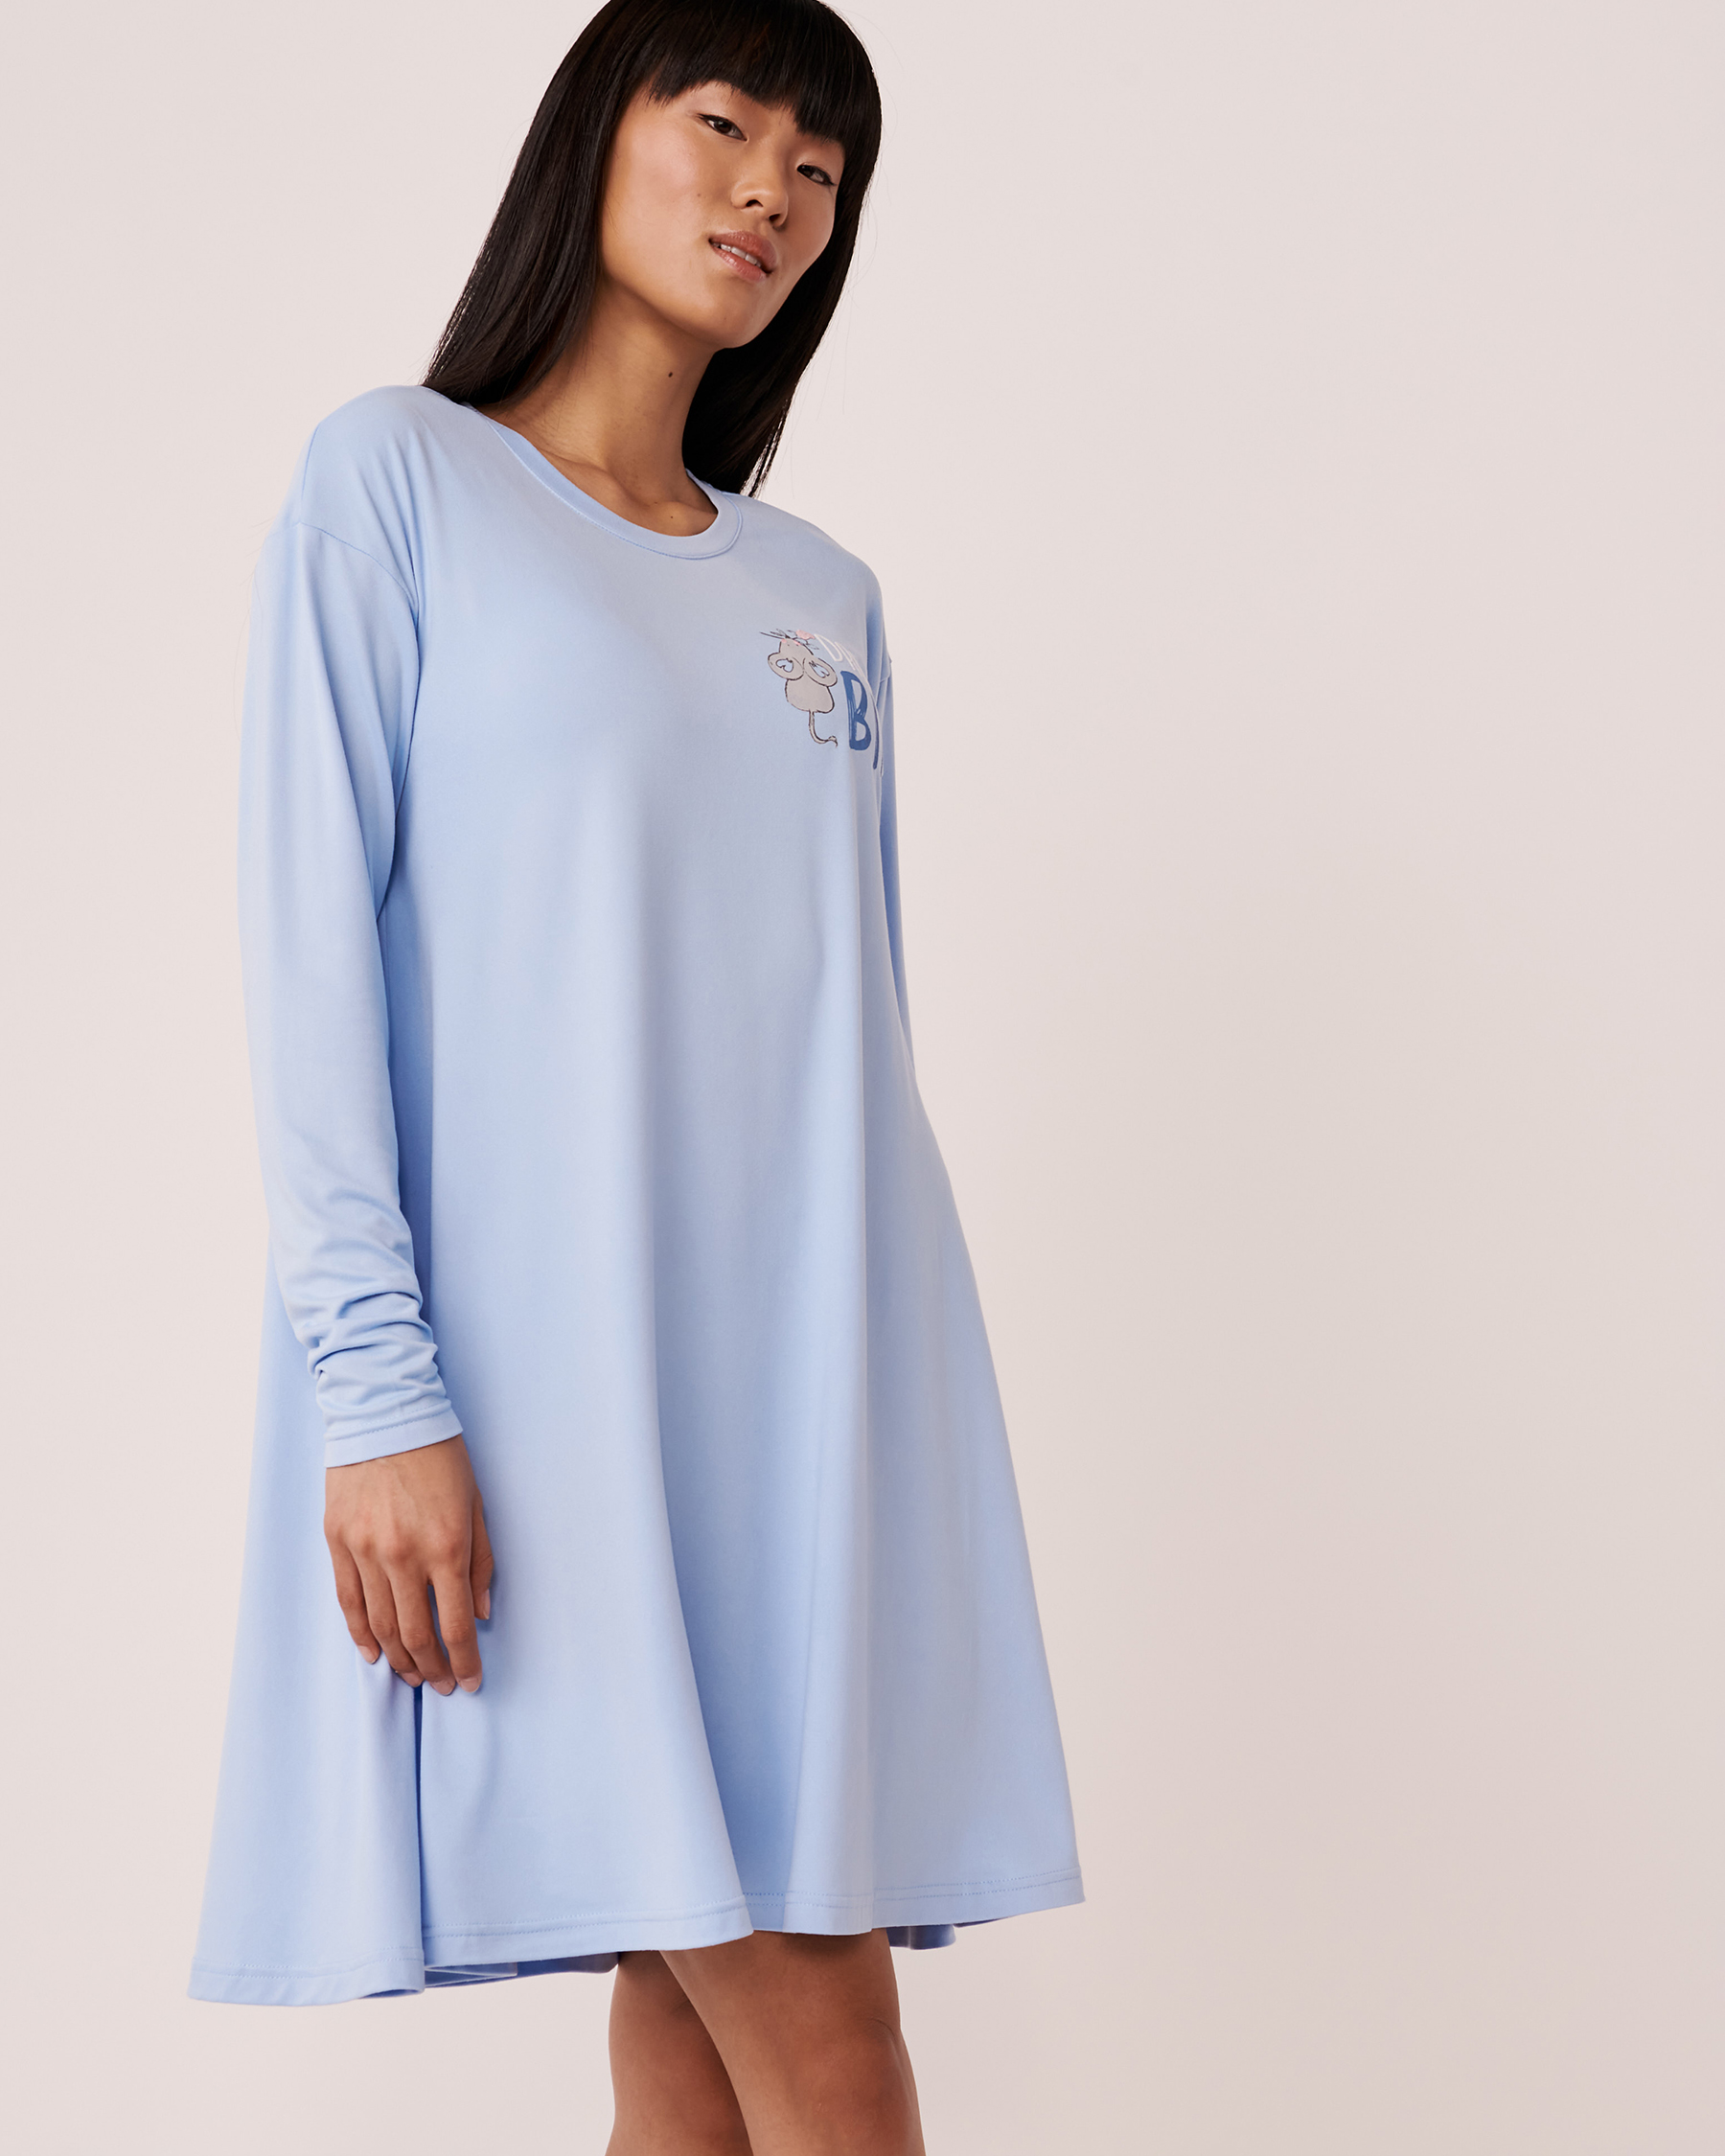 LA VIE EN ROSE Super Soft Long Sleeve Sleepshirt Deep blue 40500239 - View1